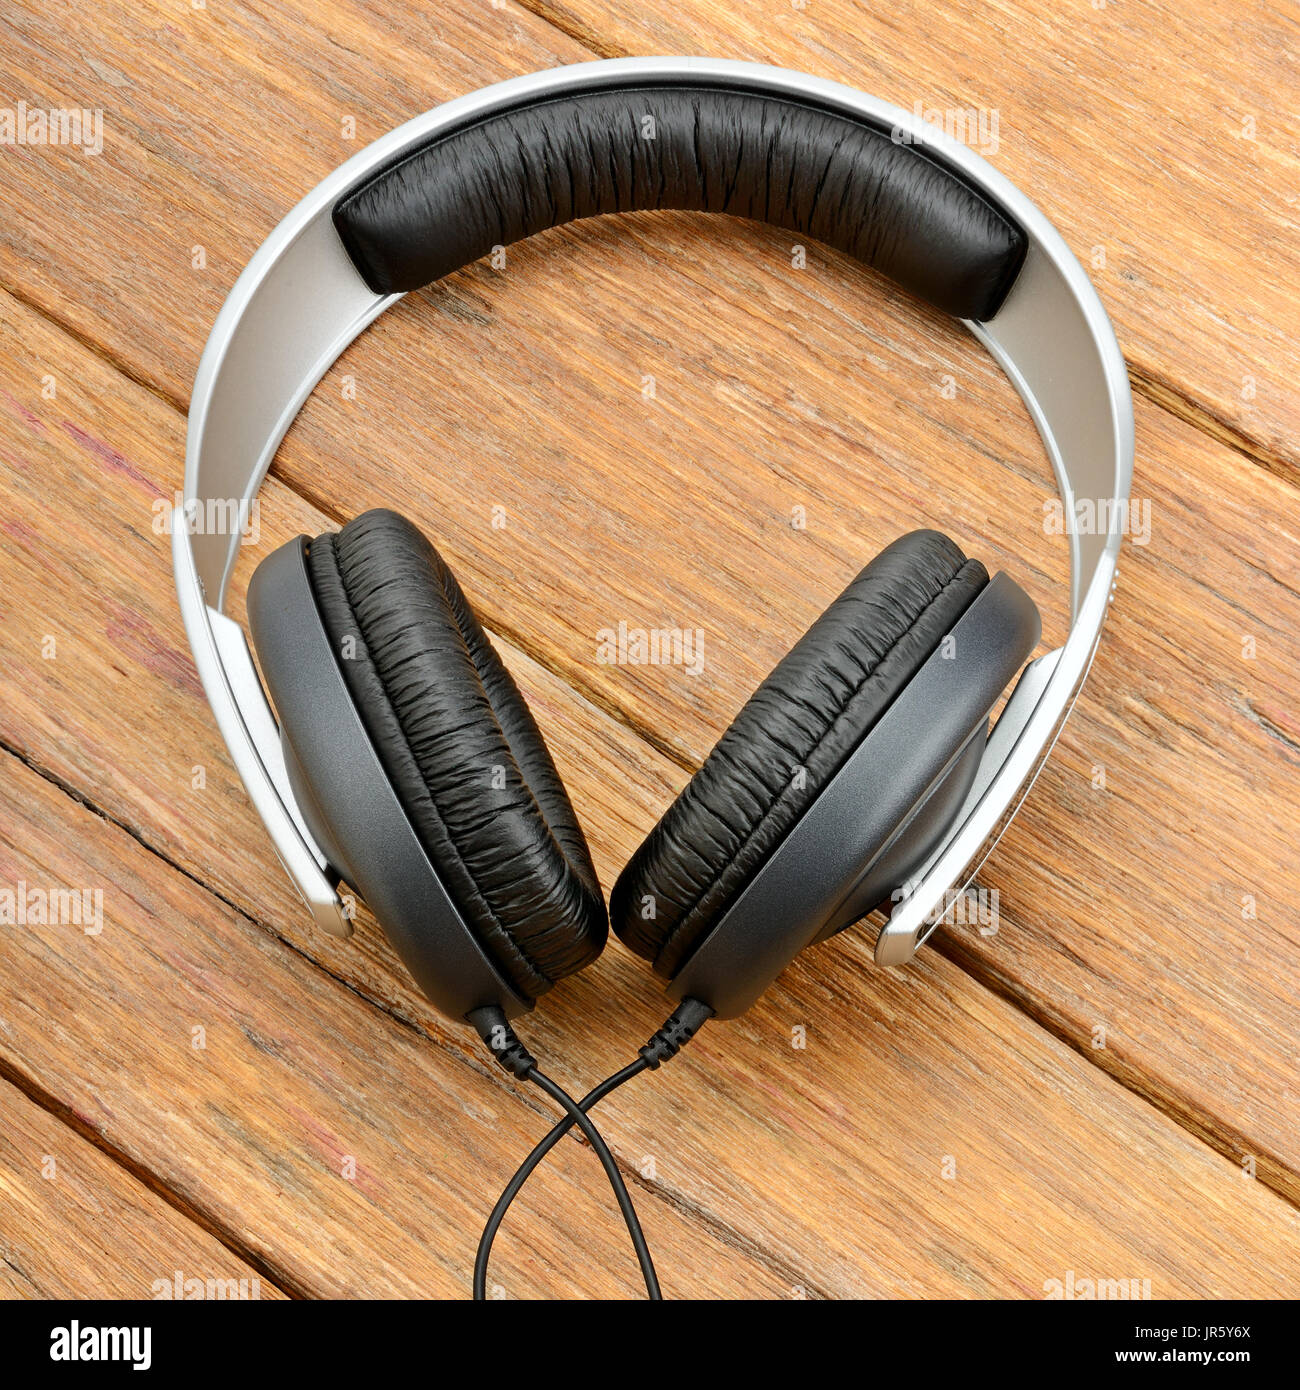 Big headphones on wooden table Stock Photo